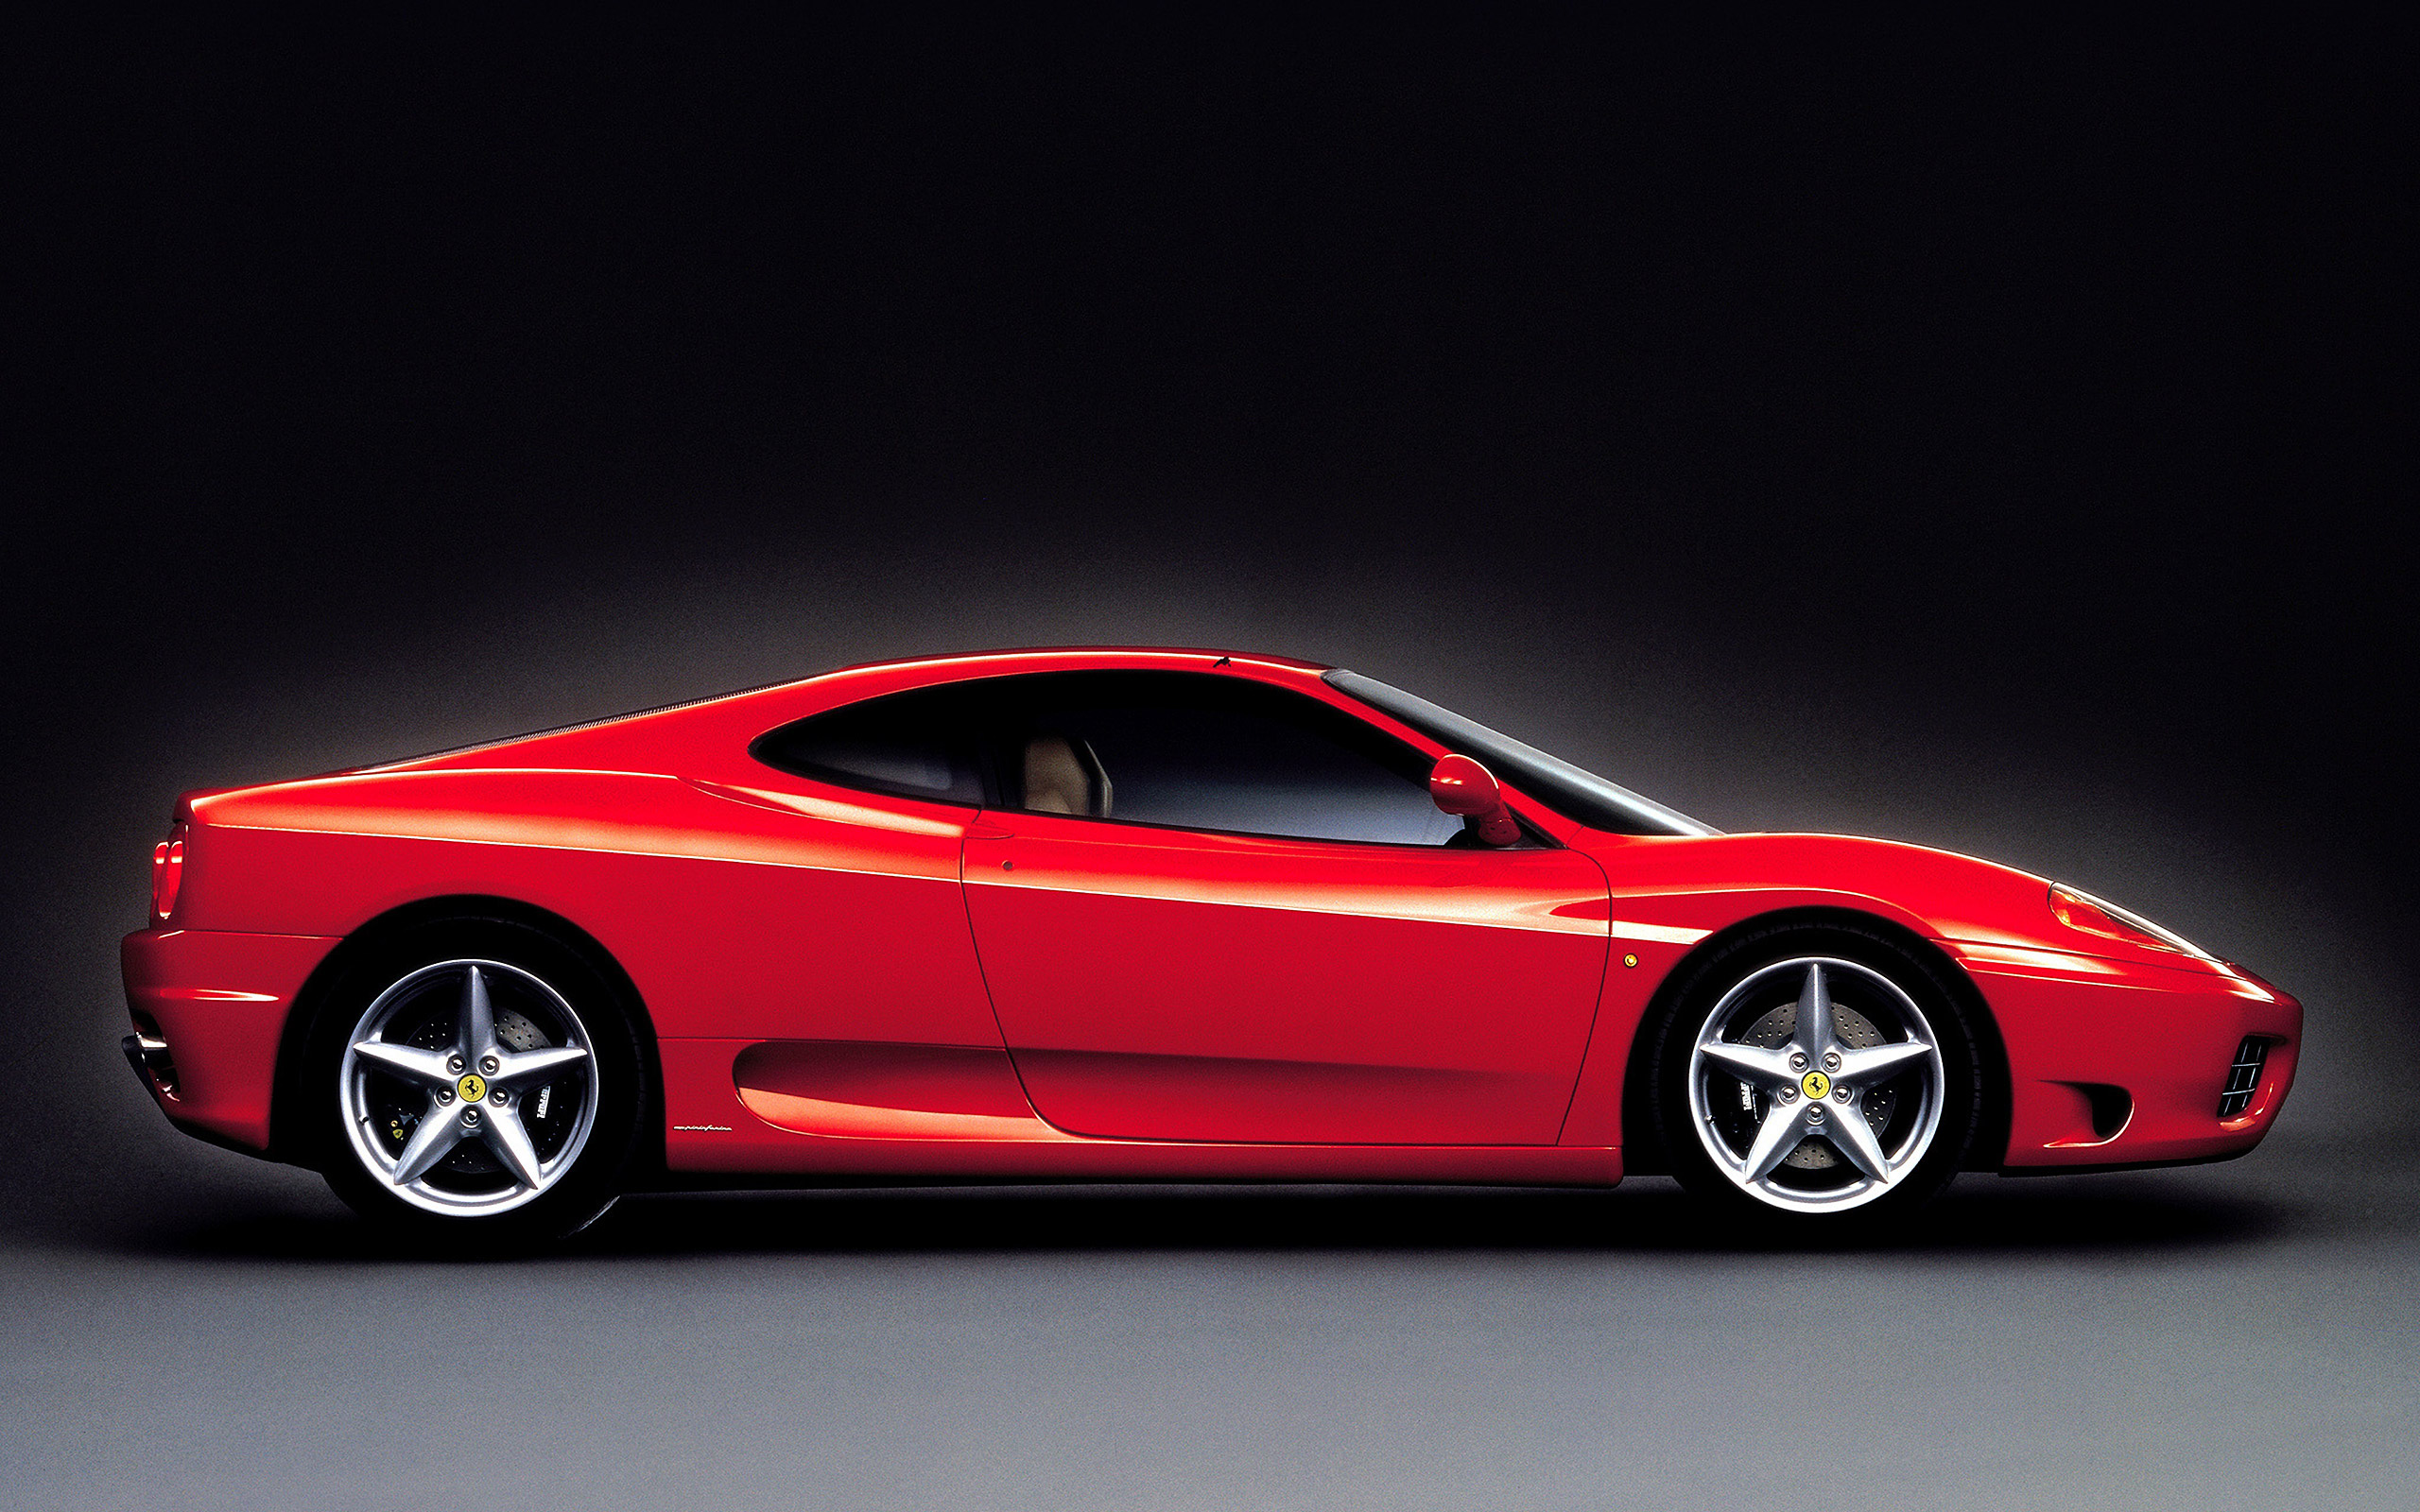  2001 Ferrari 360 Modena Wallpaper.